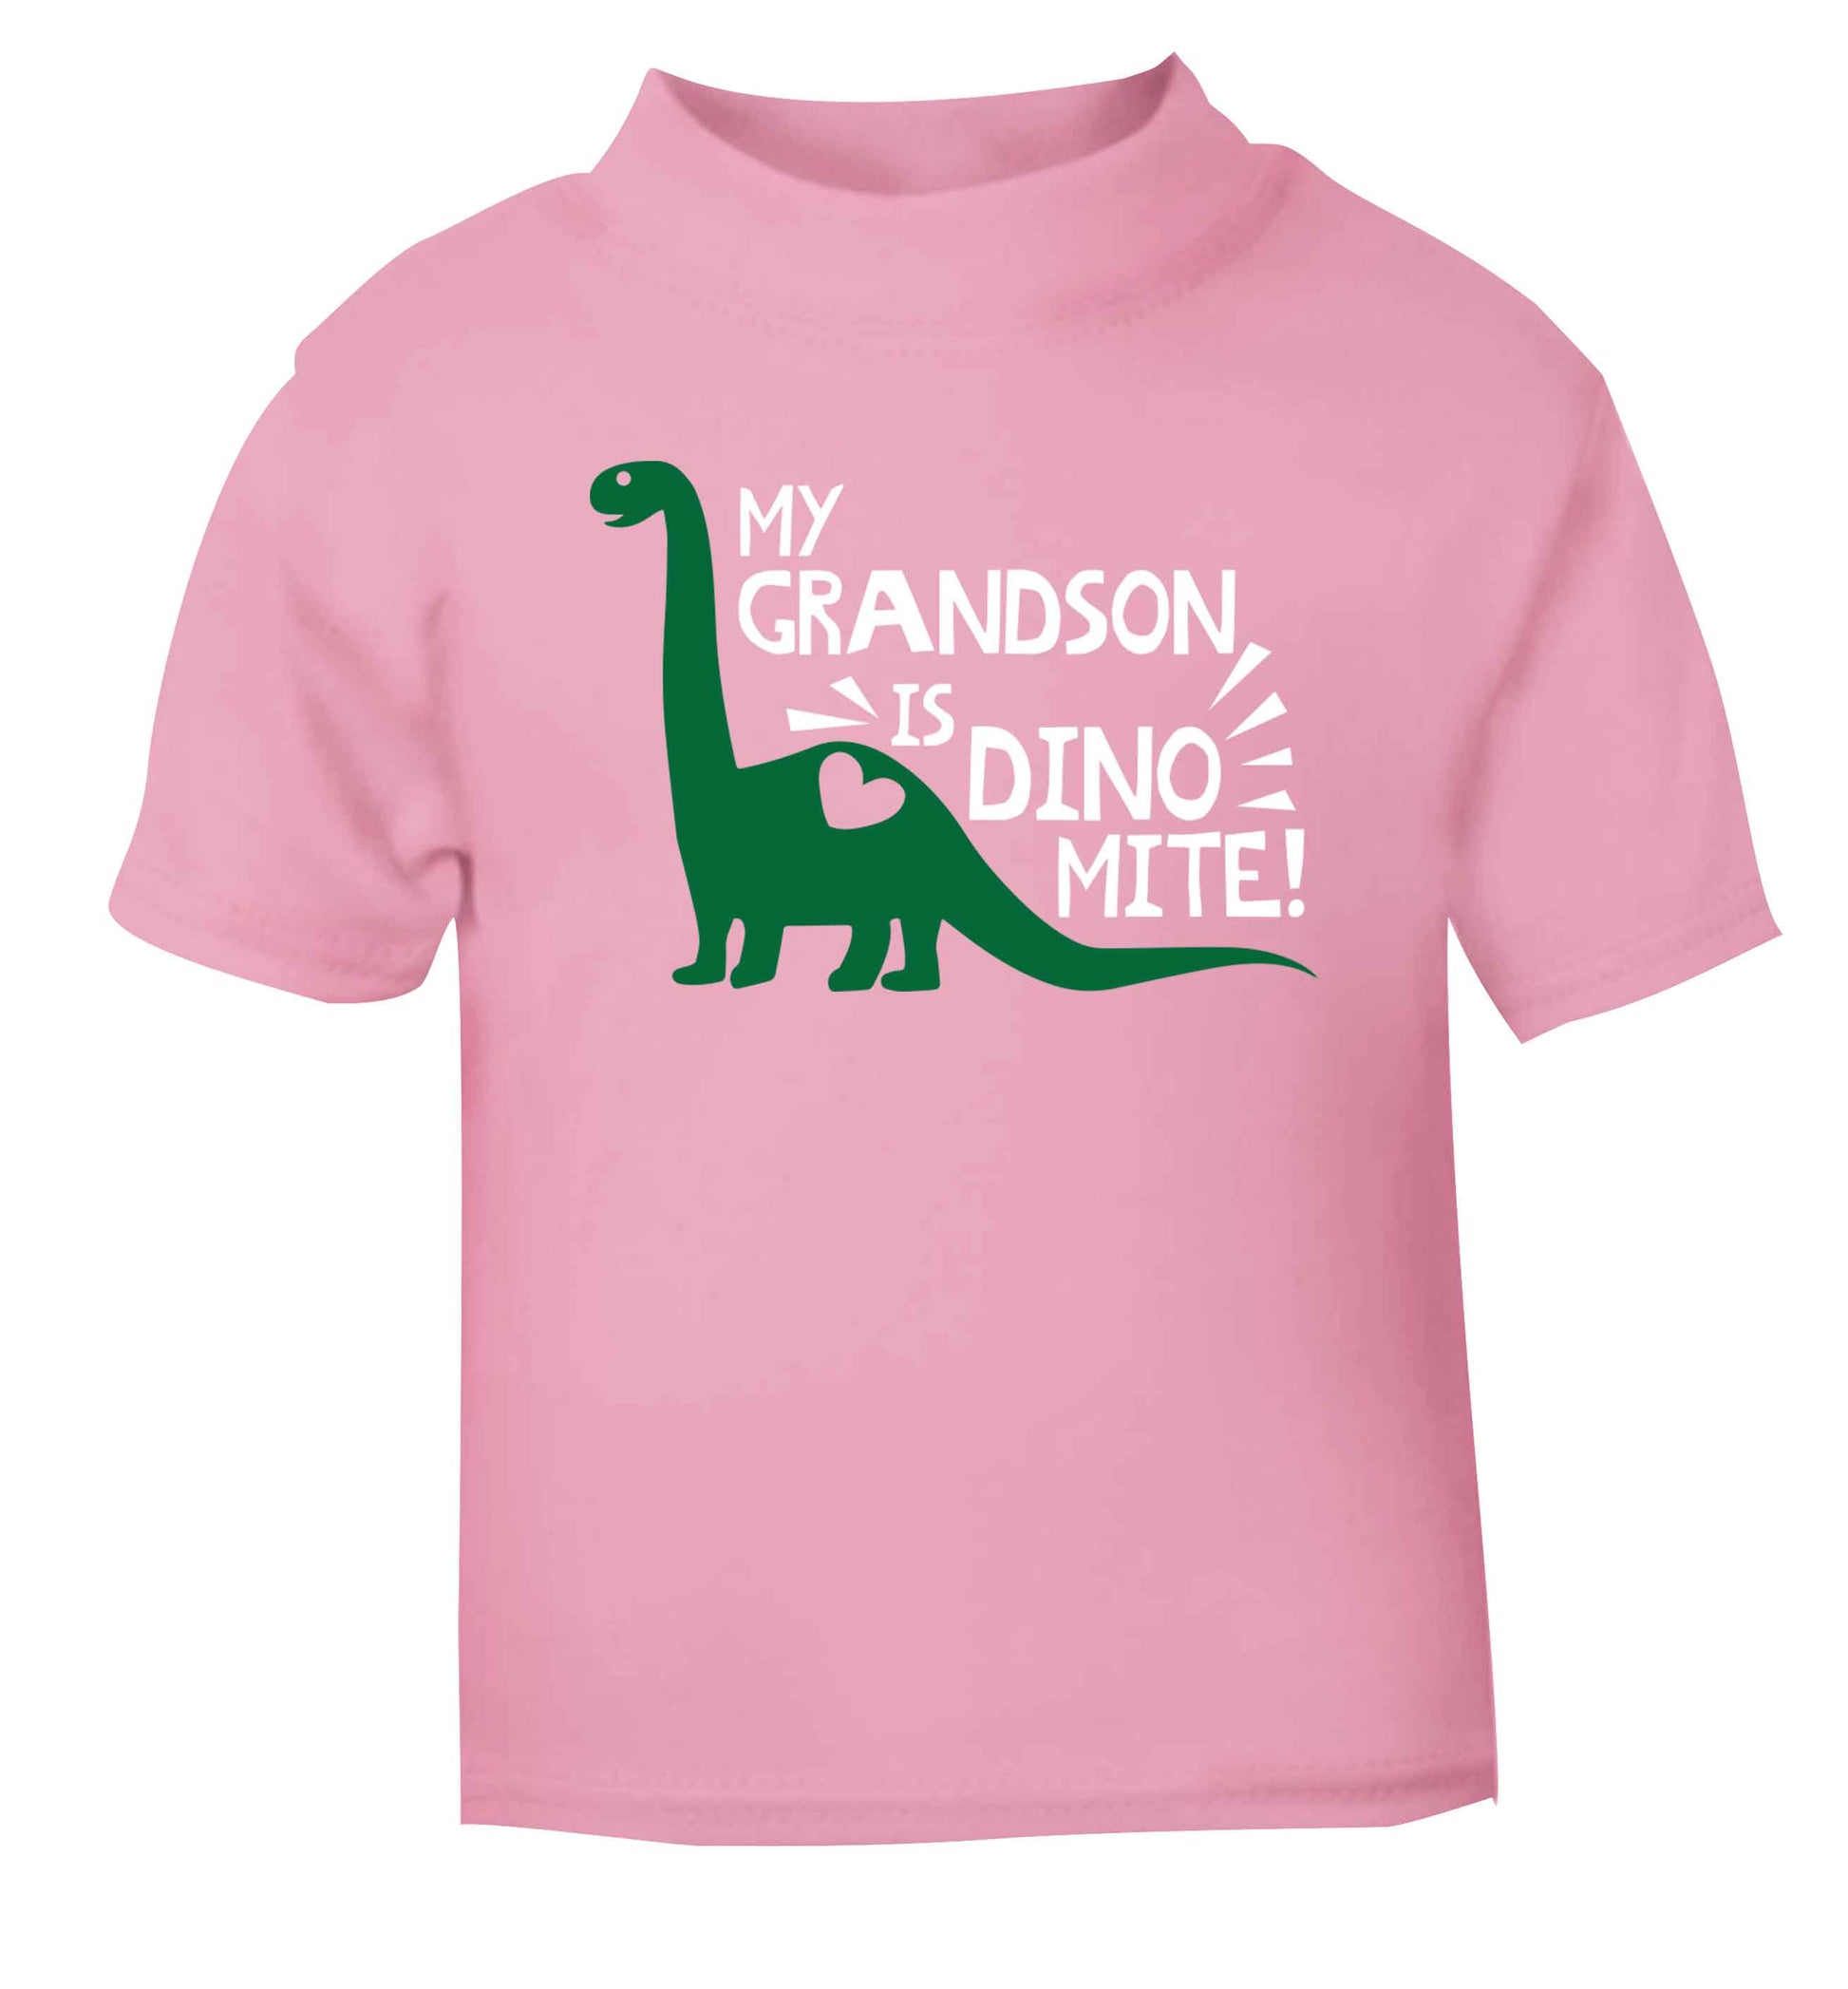 My grandson is dinomite! light pink Baby Toddler Tshirt 2 Years